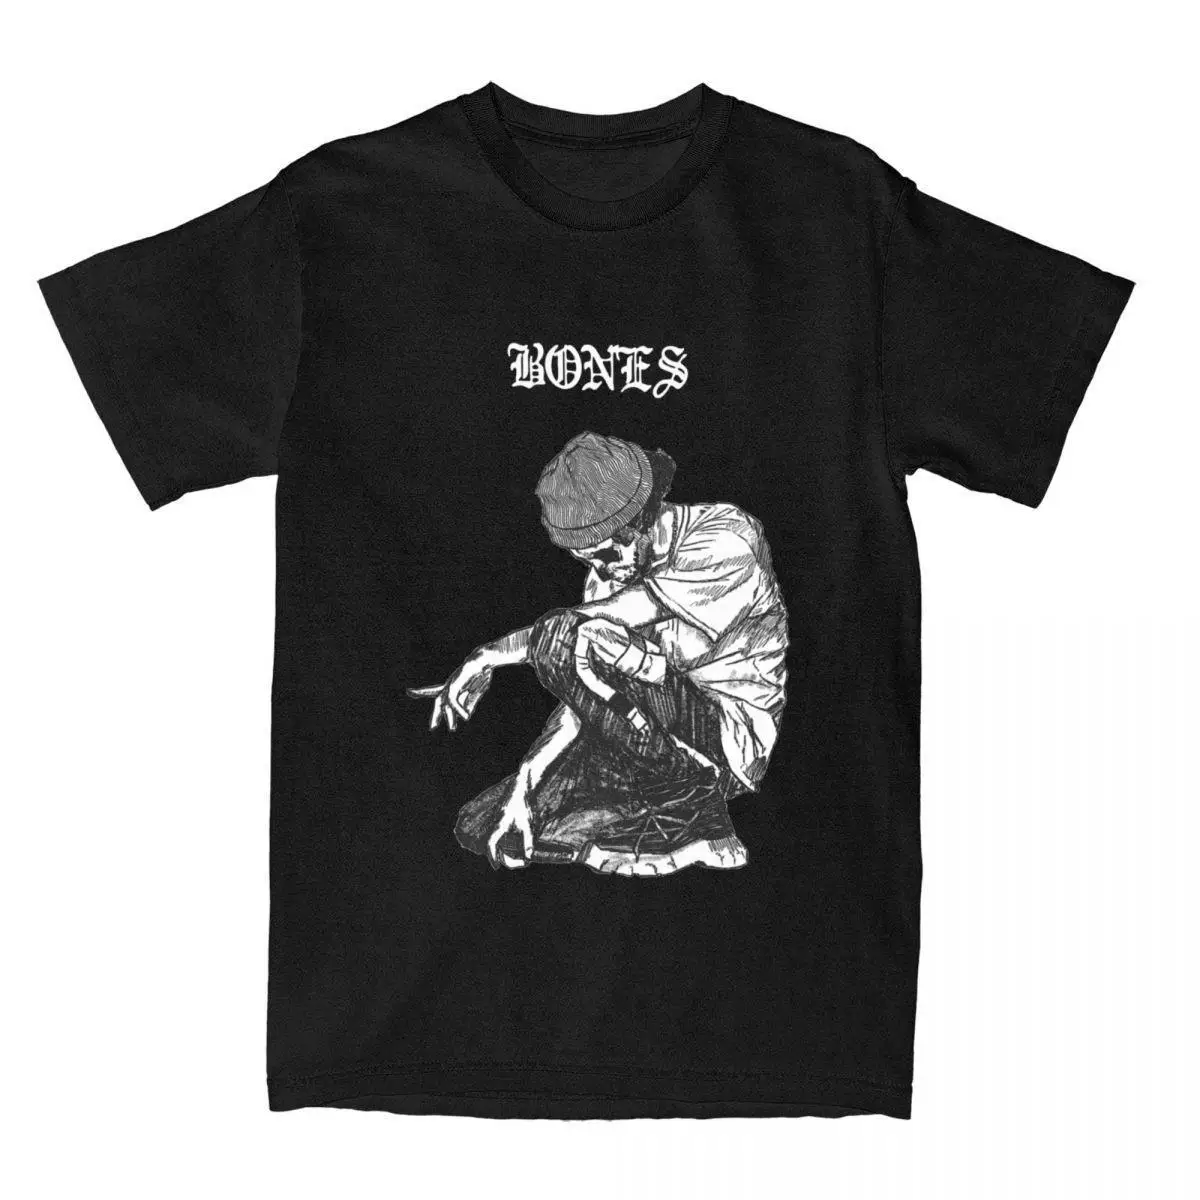 Drawn Up Sesh Bones Rapper Men T Shirts Suicide Boys Novelty Tees Short Sleeve Round Neck T-Shirt Pure Cotton Gift Idea Clothes